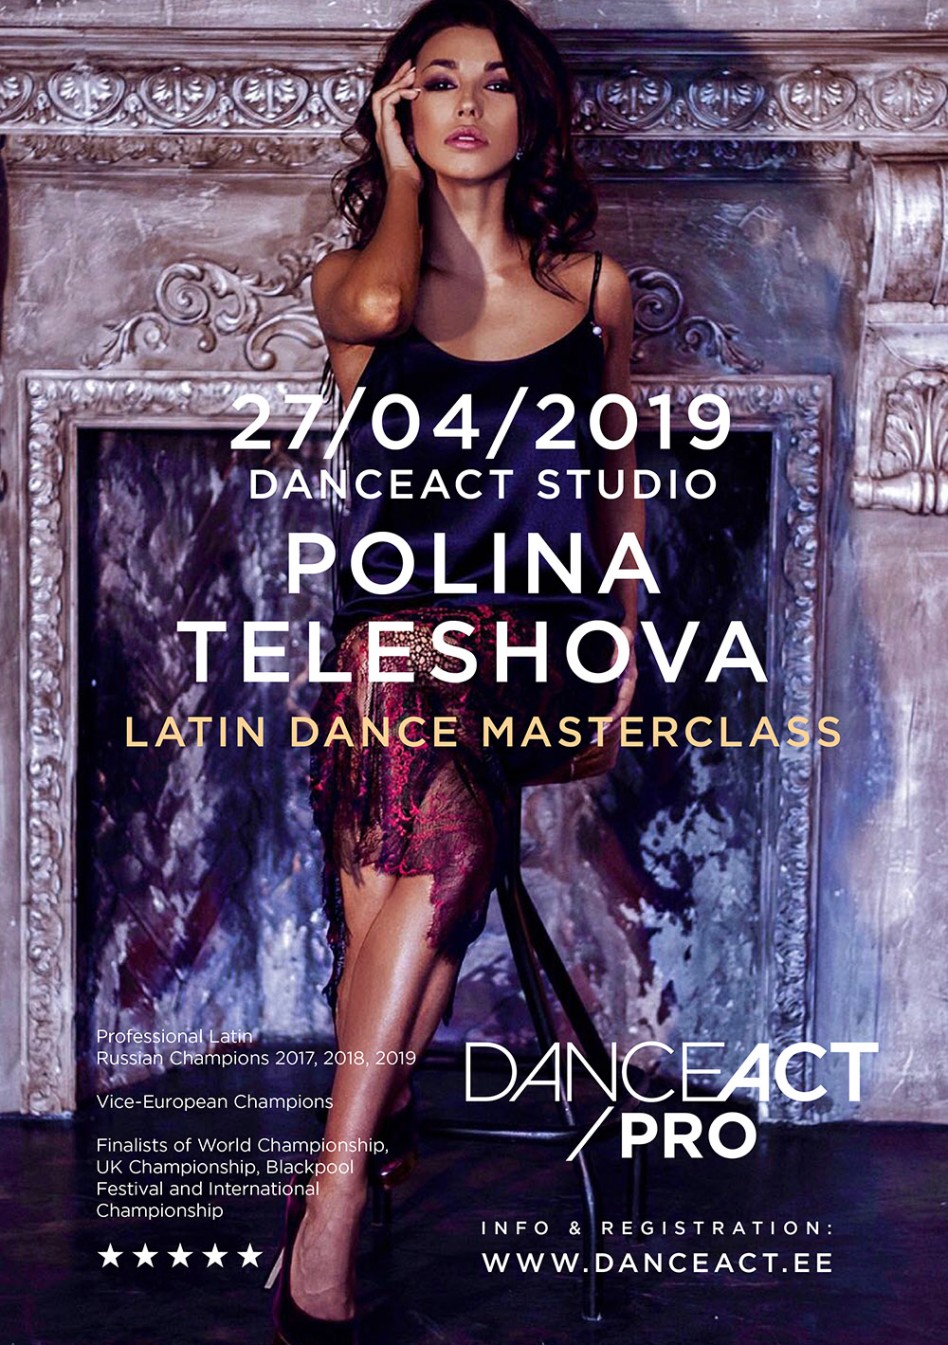 POLINA TELESHOVA latin dance masterclasses | April 27th @ DanceAct